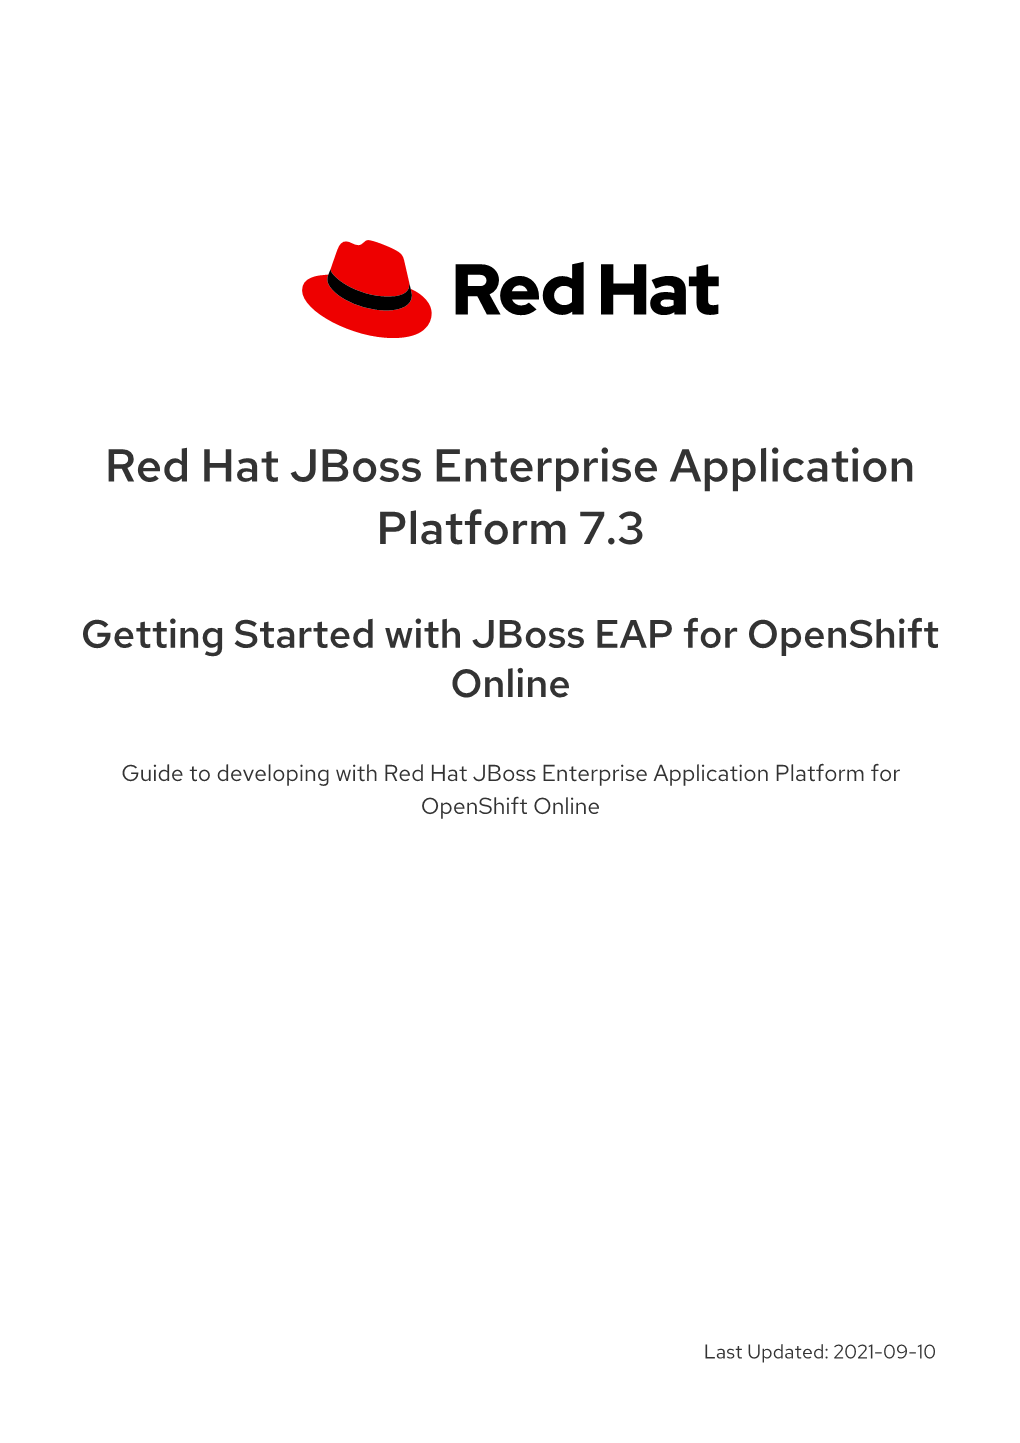 Red Hat Jboss Enterprise Application Platform 7.3 Getting Started with Jboss EAP for Openshift Online